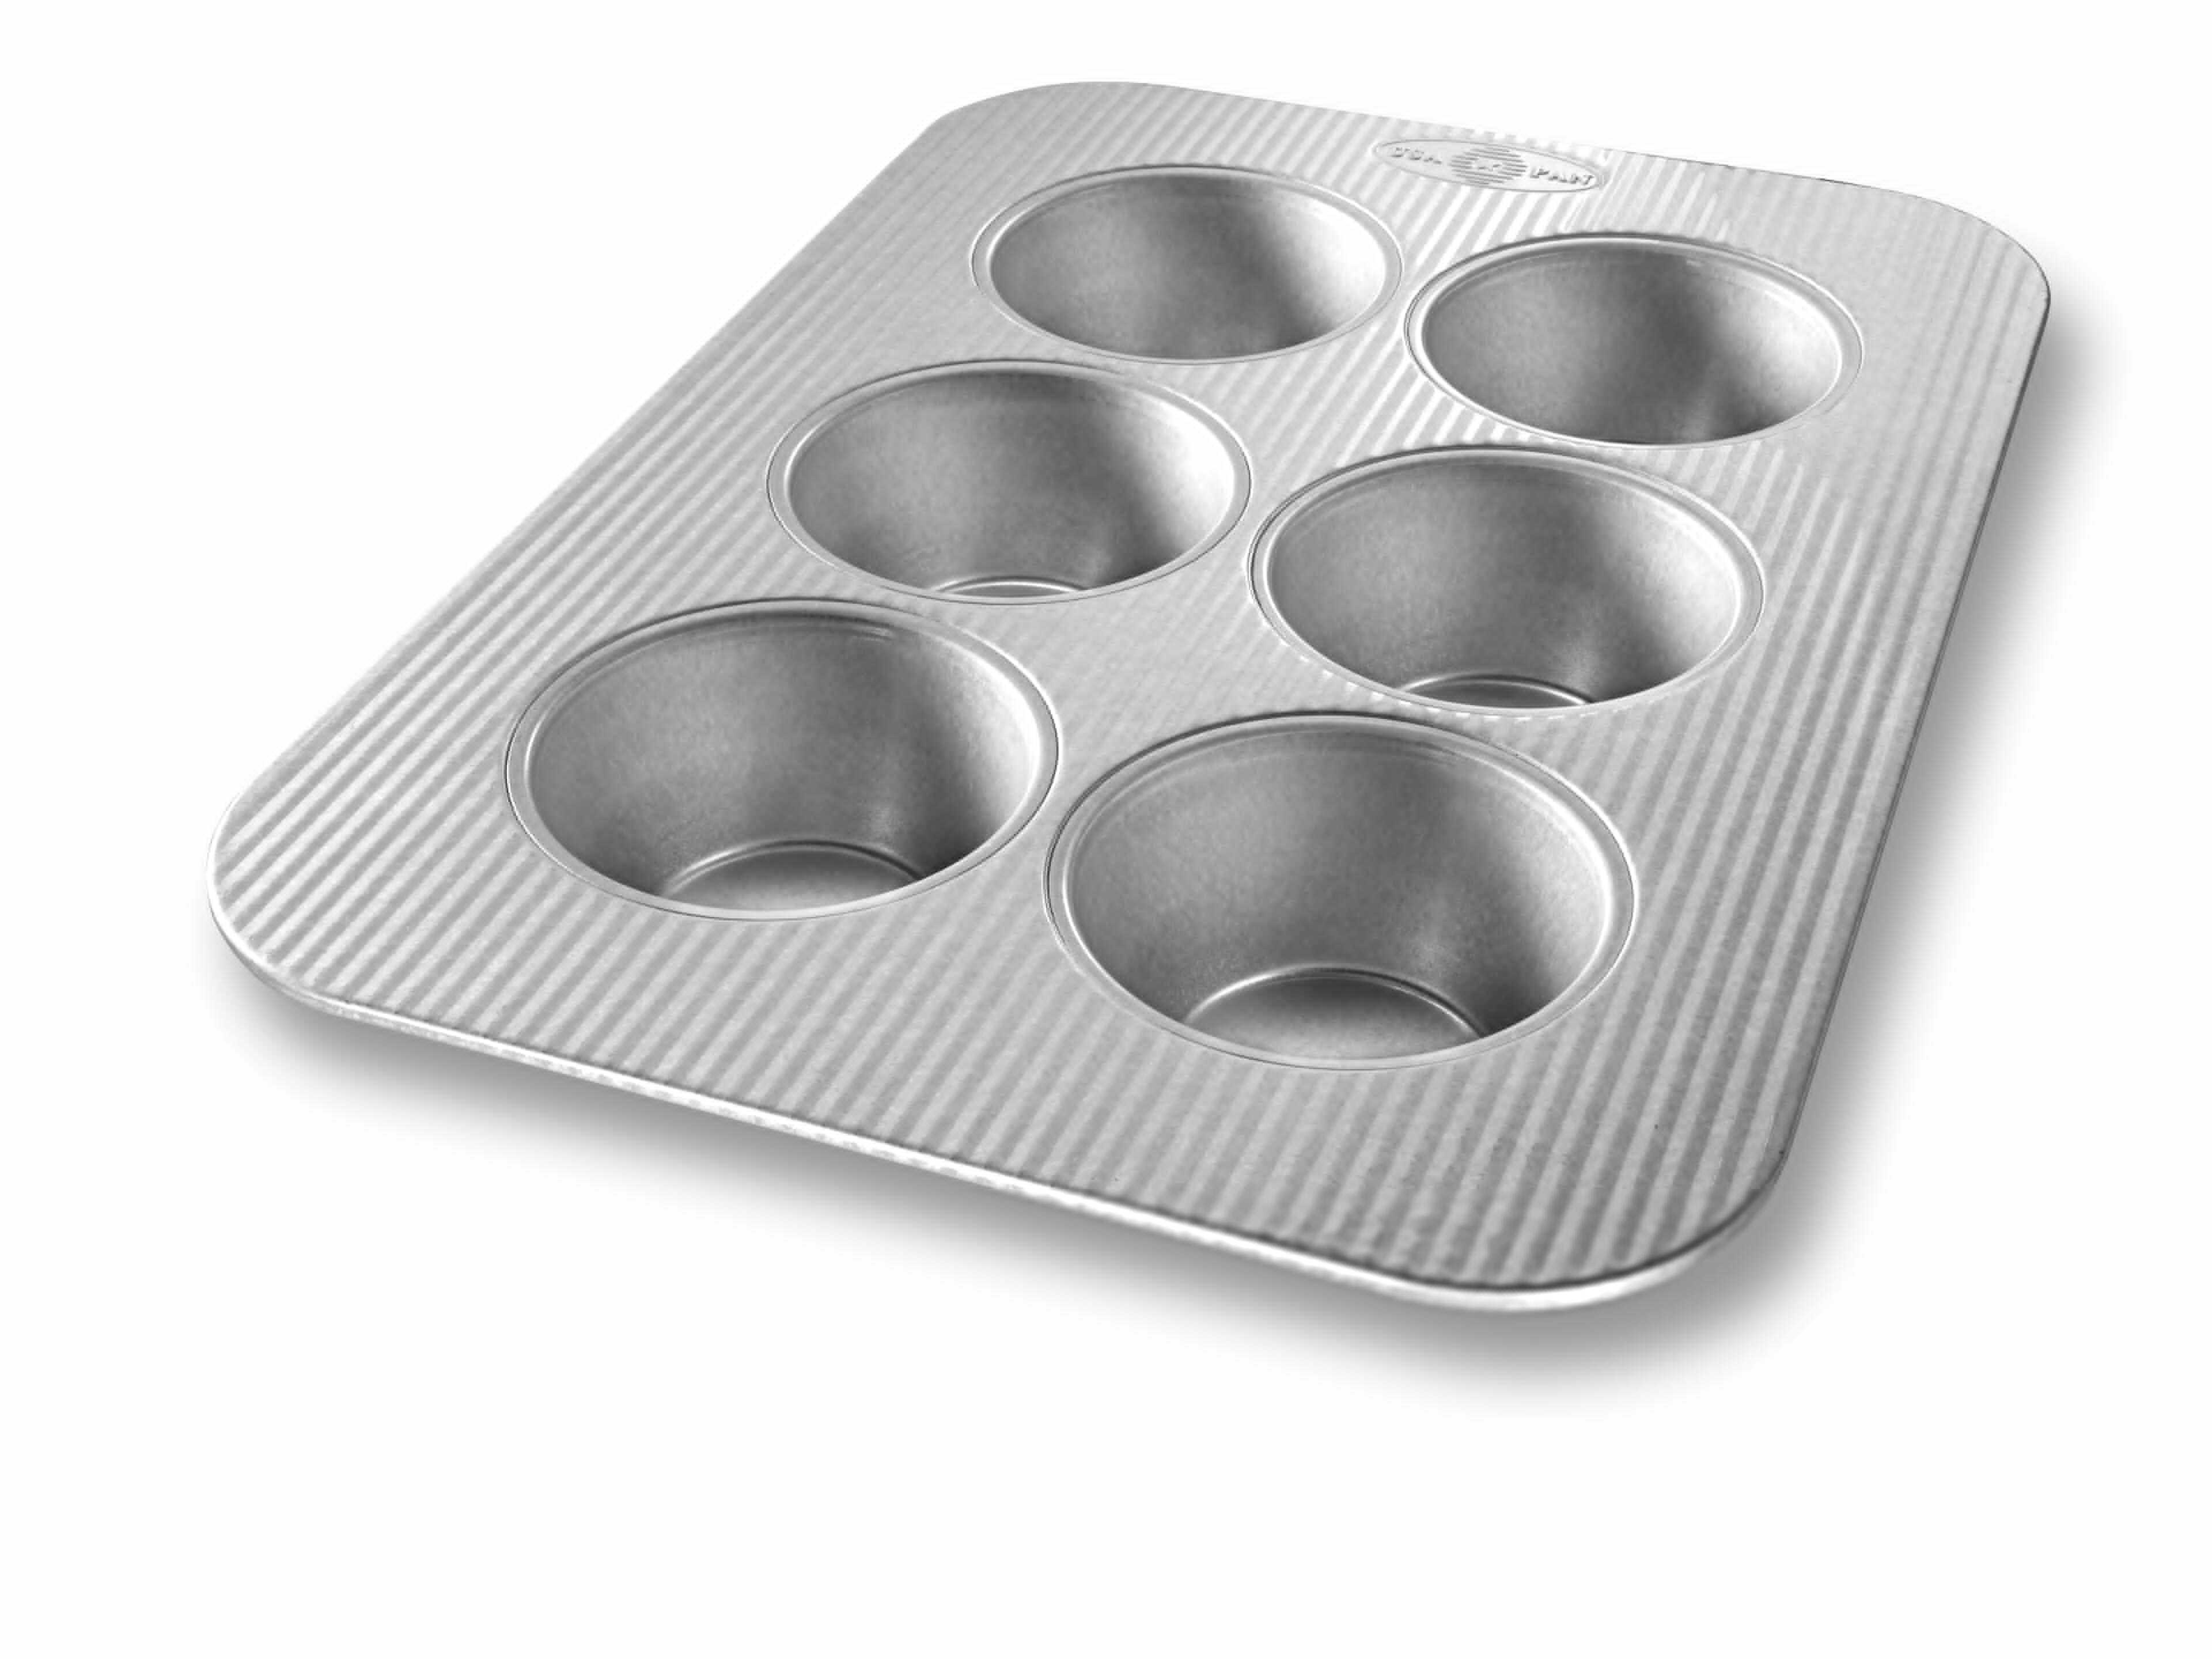 Silicone Muffin Pan Set, Cupcake Tray Baking Mold, Non-stick